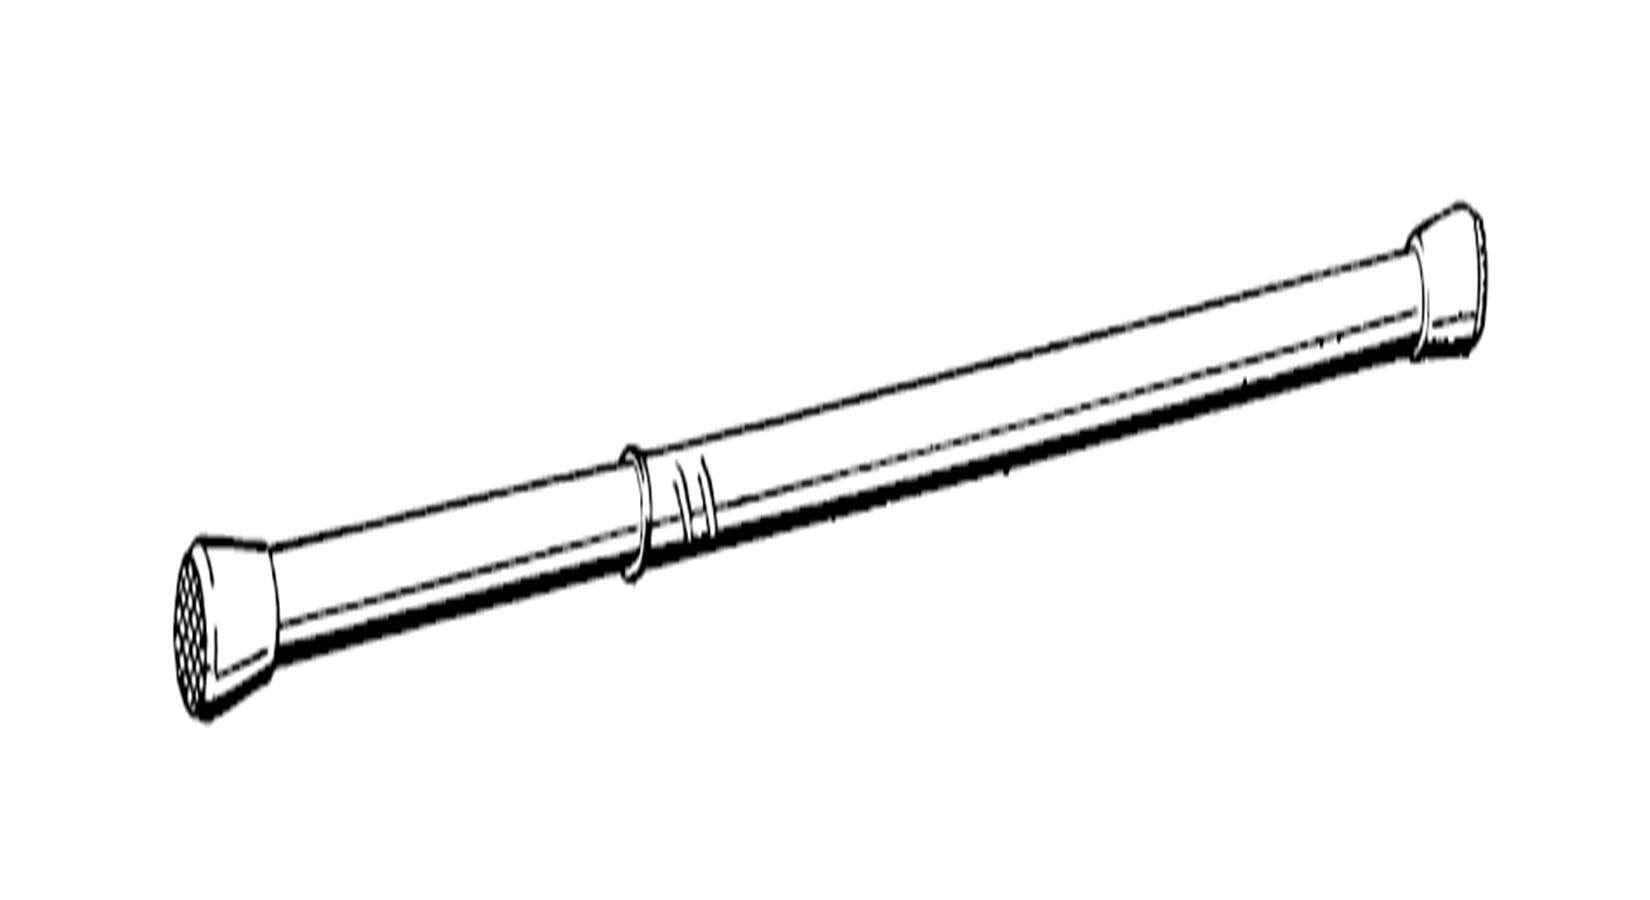 Levolor Tension Rod, White Round, 18-28"